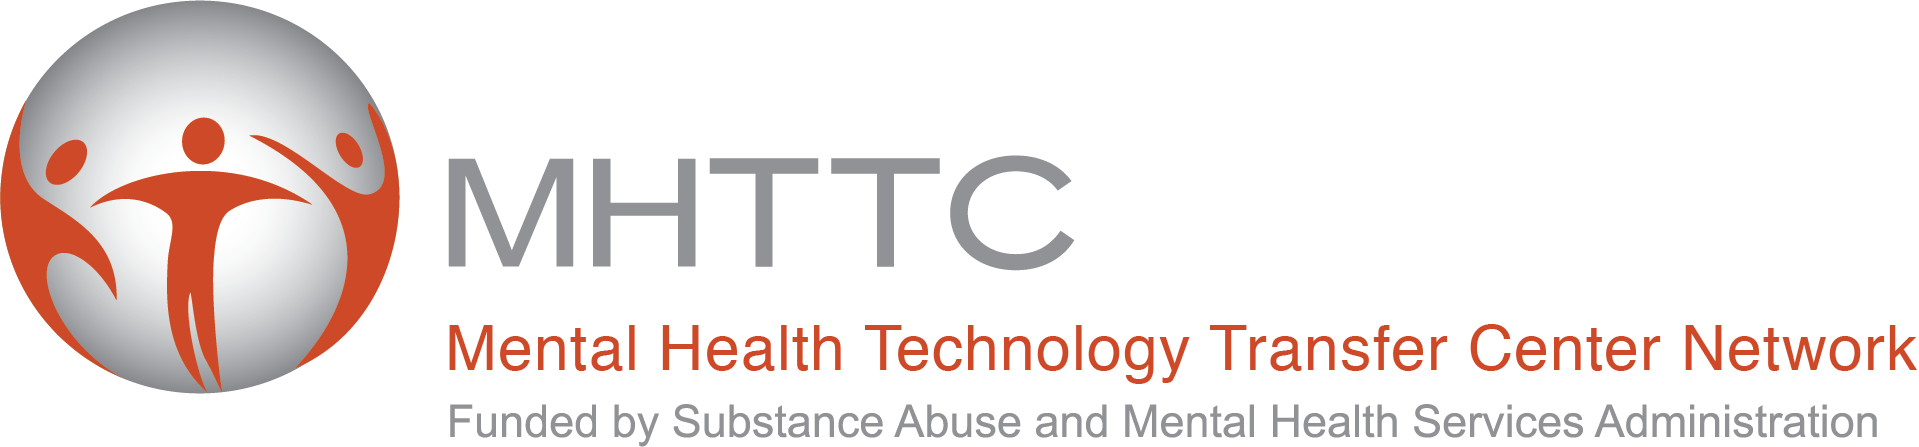 mhttc logo